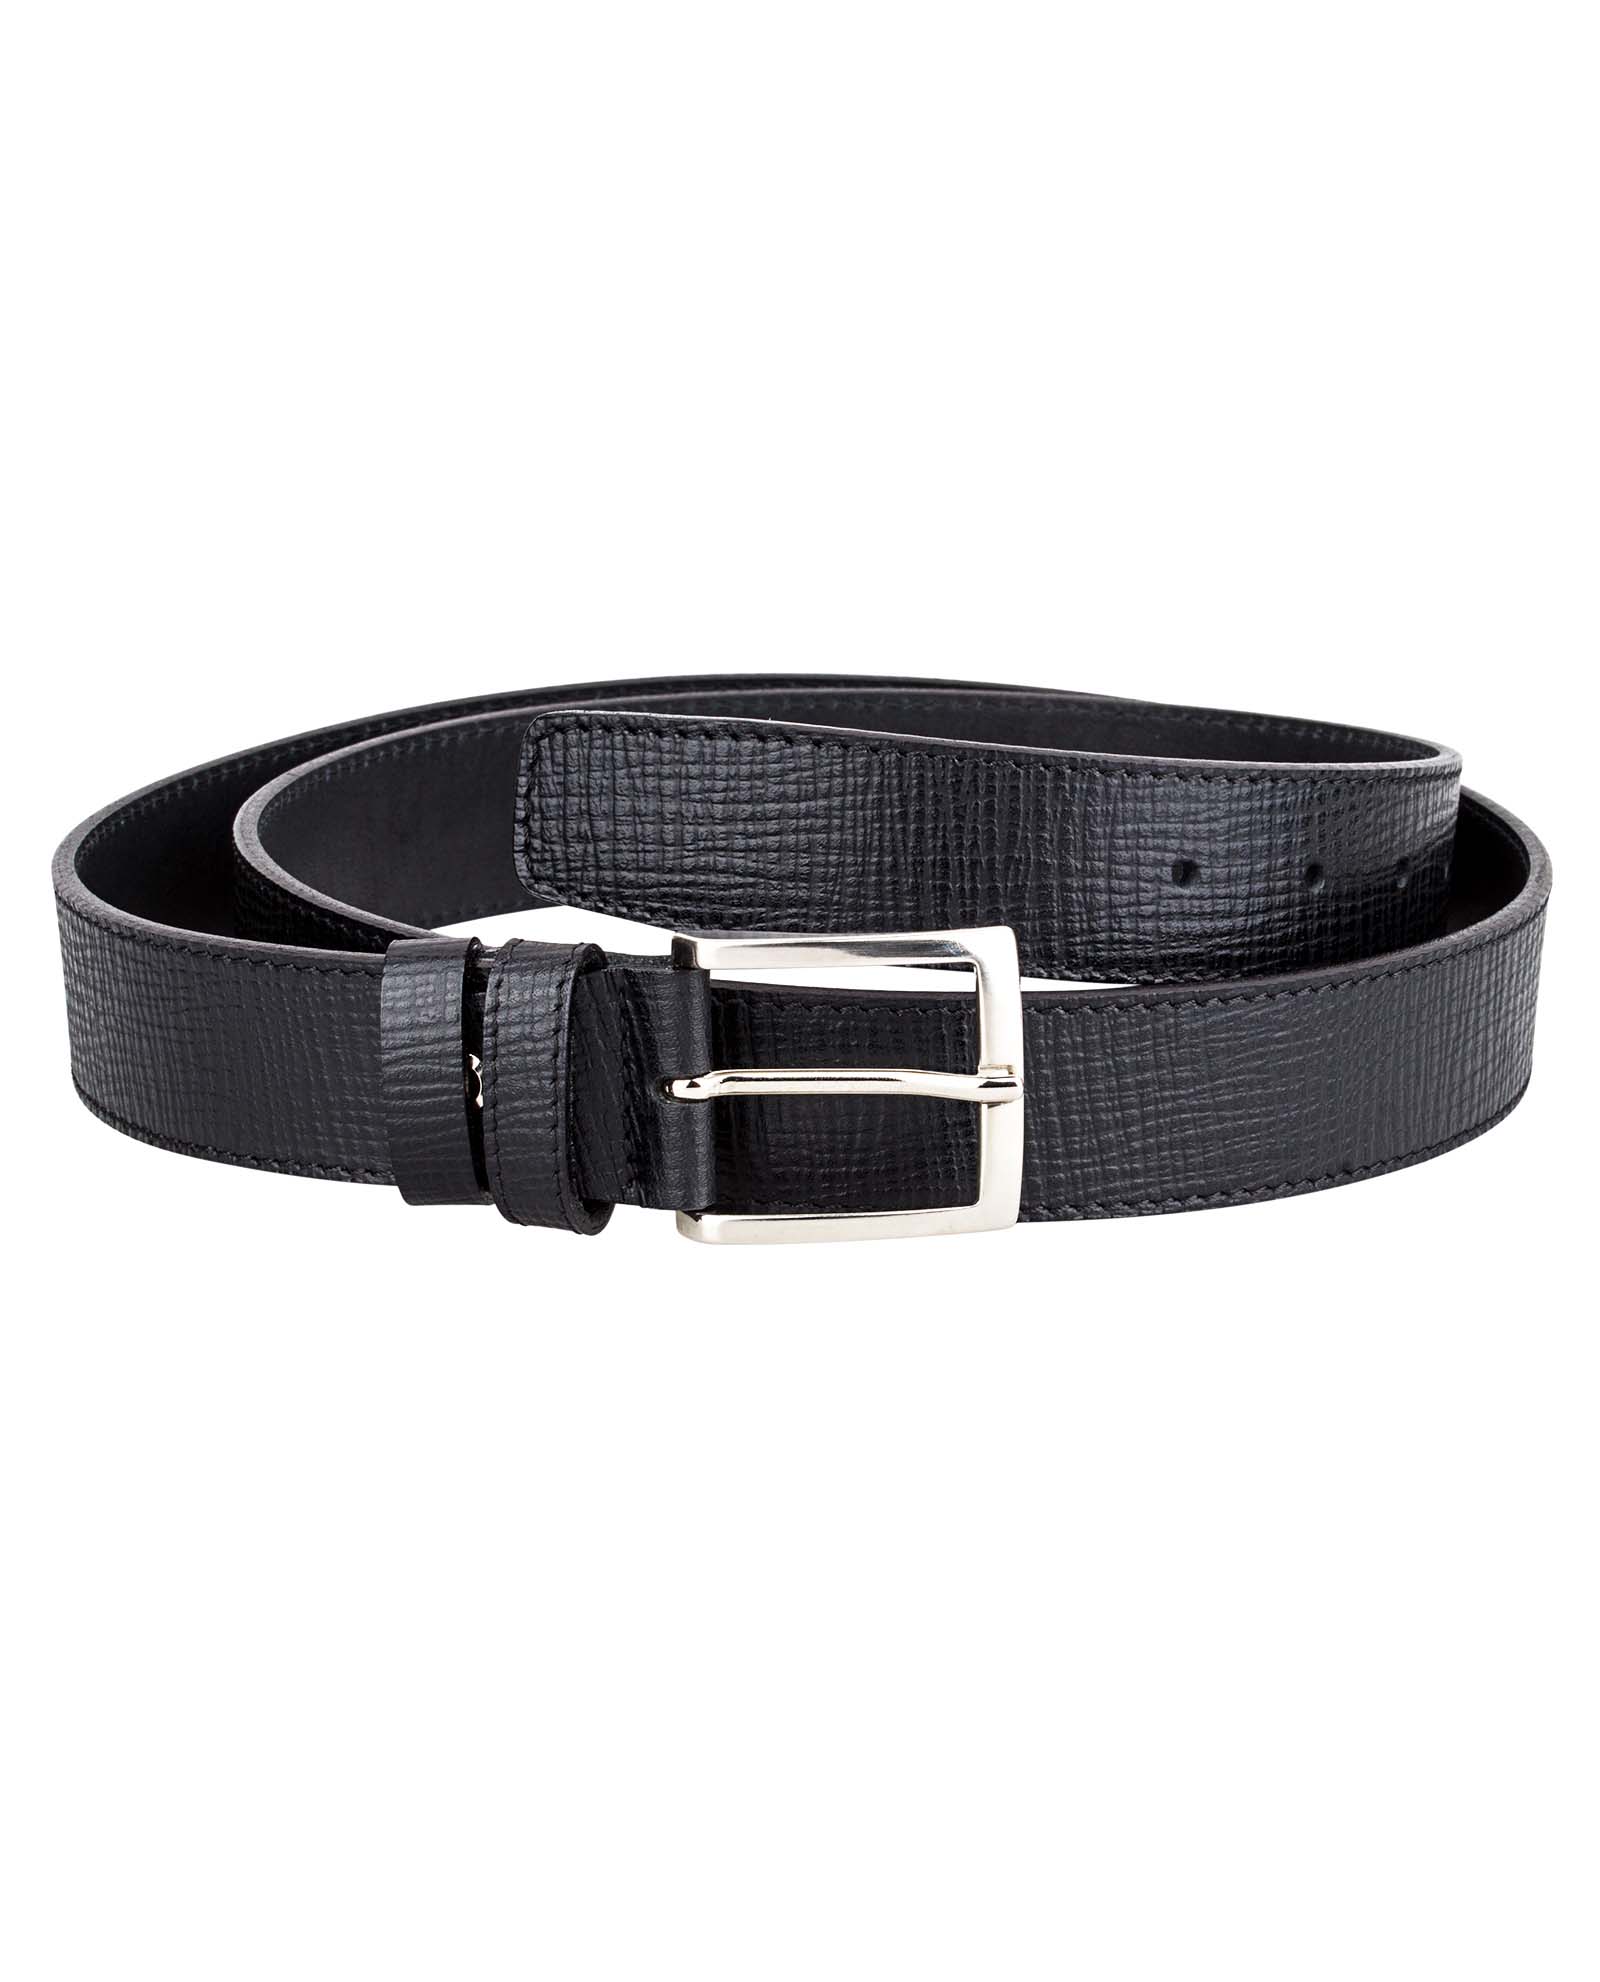 Buy Men's Black Italian Leather Belt - Capo Pelle - Free Shipping